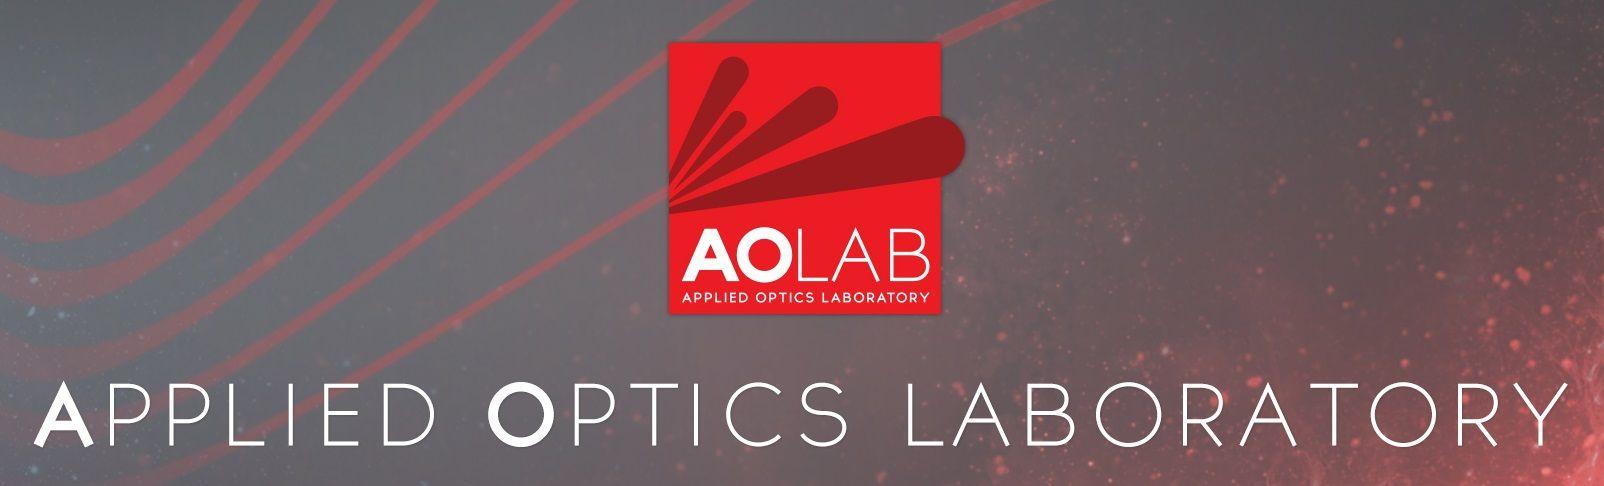 Optics Lab Logo - Applied Optics Laboratory - Department of Wireless Communications